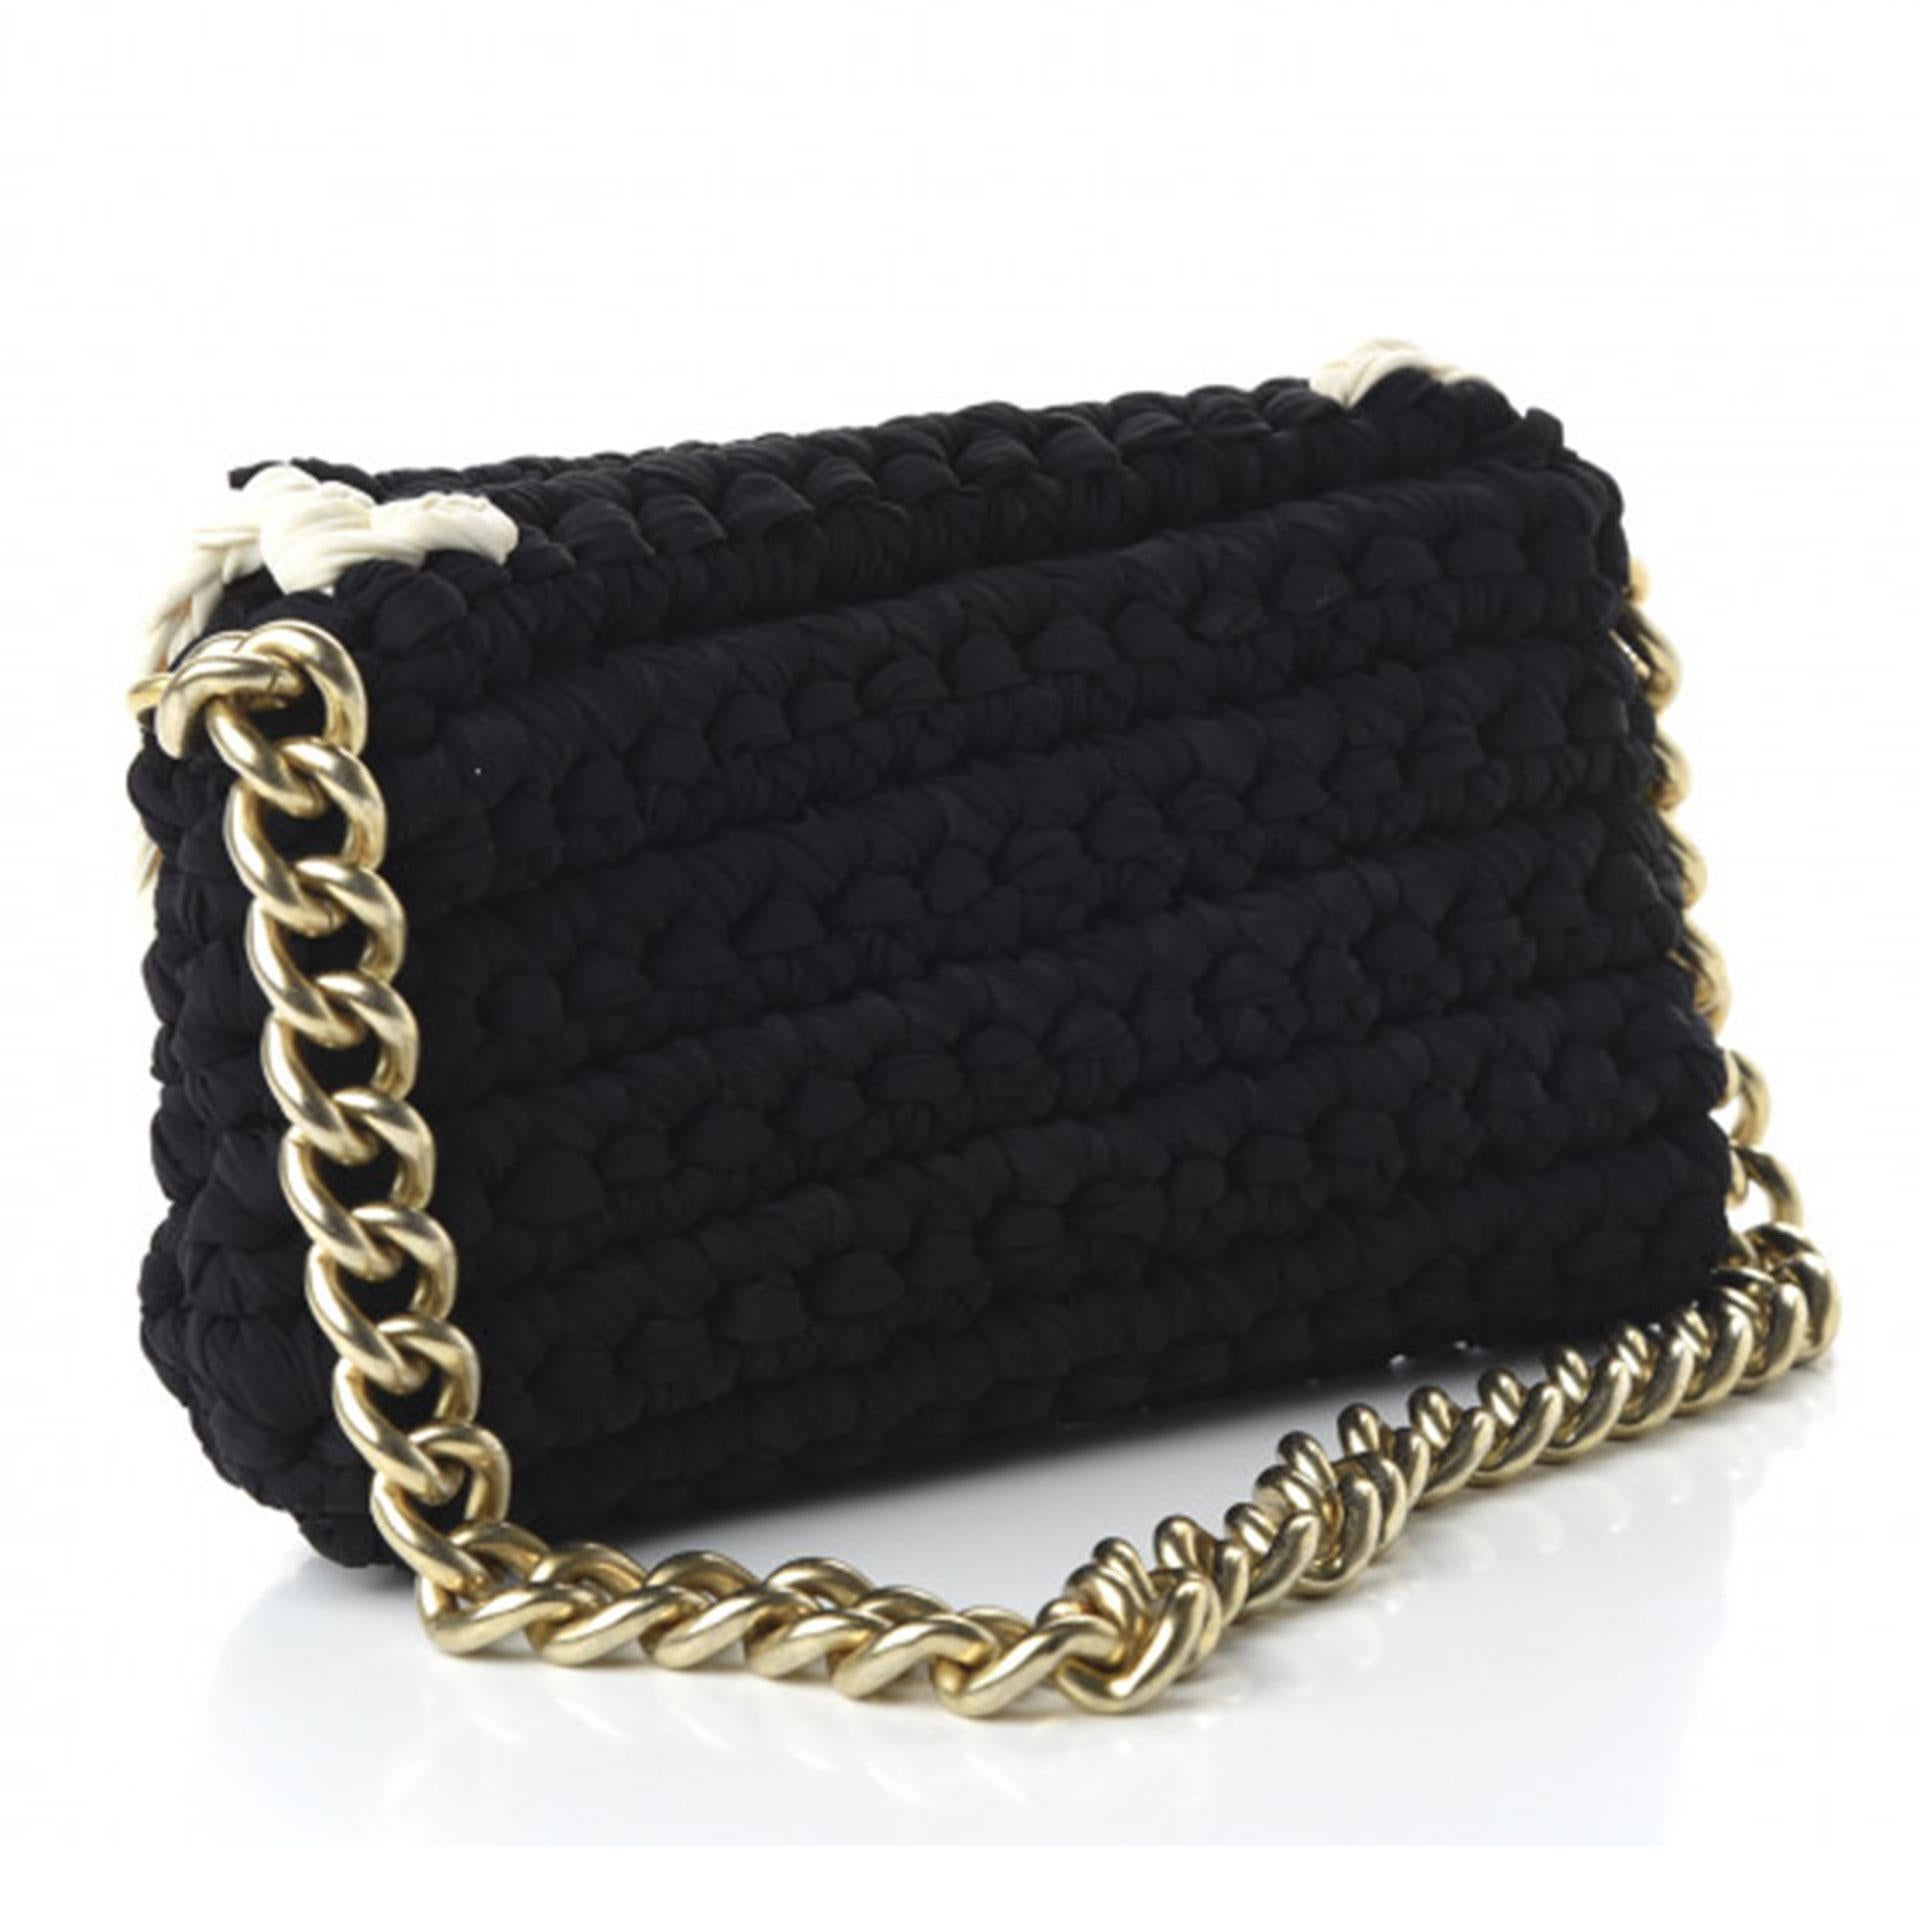 Chanel Interwoven Woven Crochet Bicolor Two Tone Medium Black & White Flap Bag For Sale 2